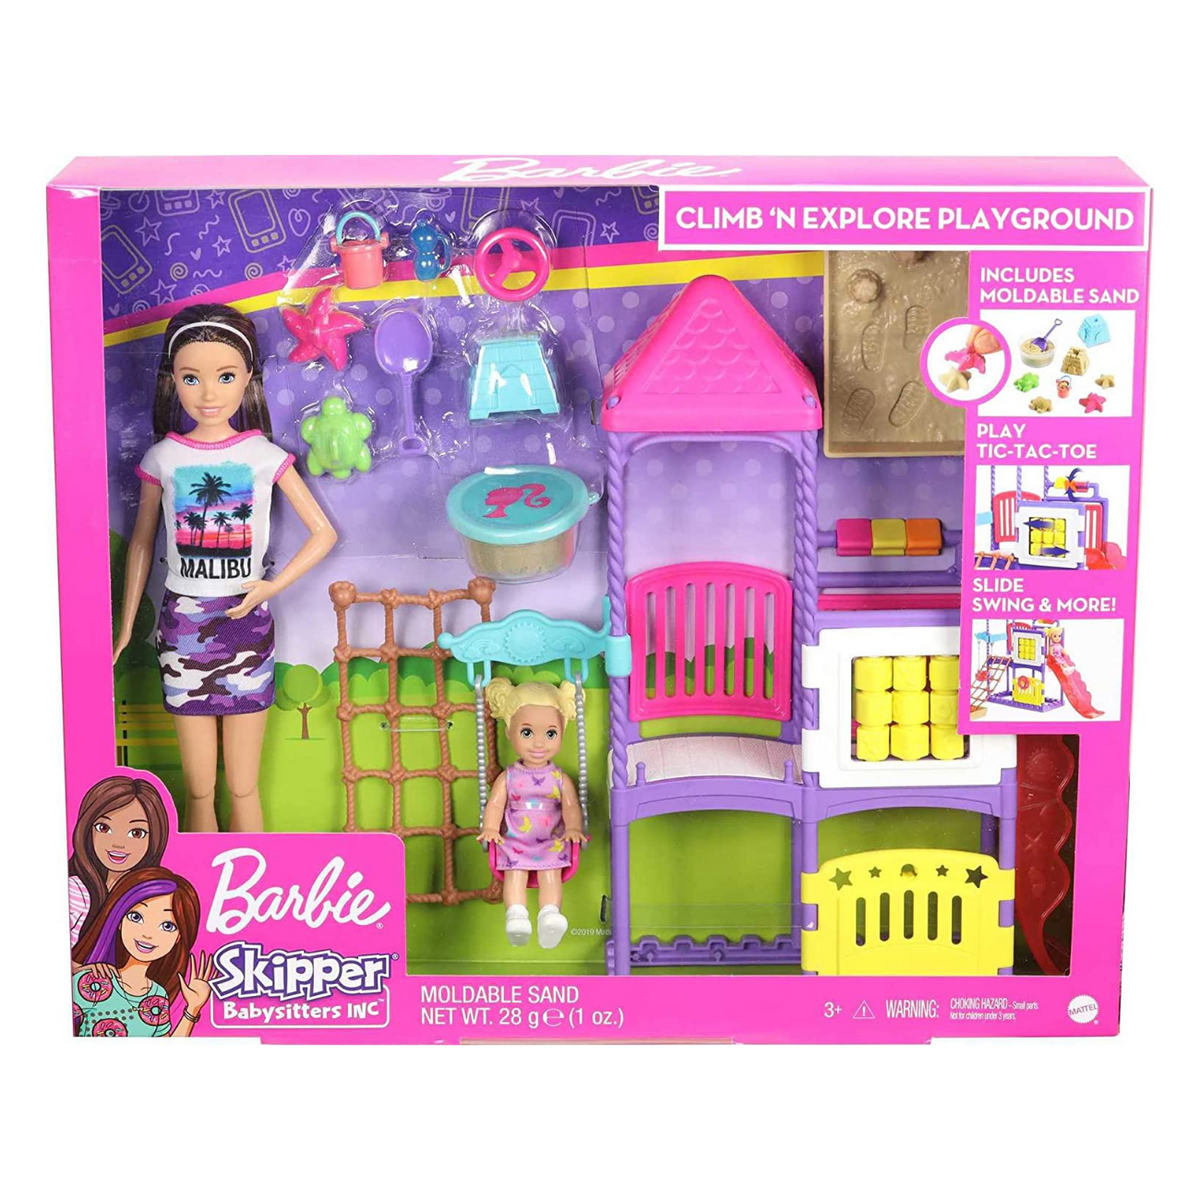 Barbie Skipper Babysitters Inc. Climb 'n Explore Playground – Child's Play